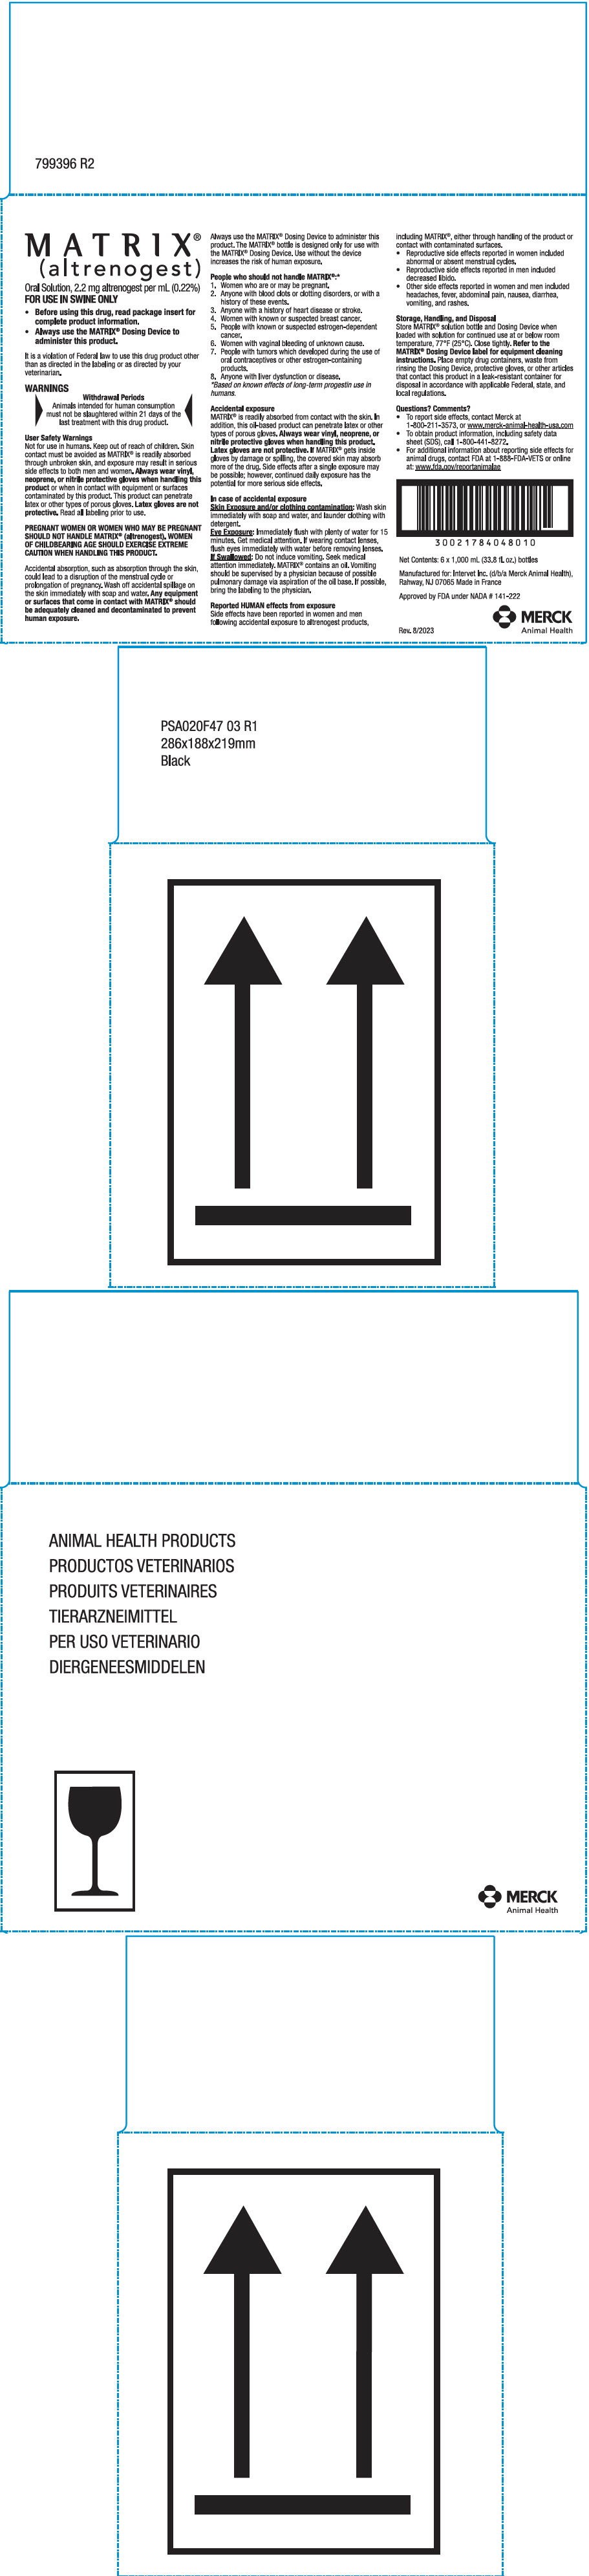 PRINCIPAL DISPLAY PANEL - 1000 mL Bottle Carton